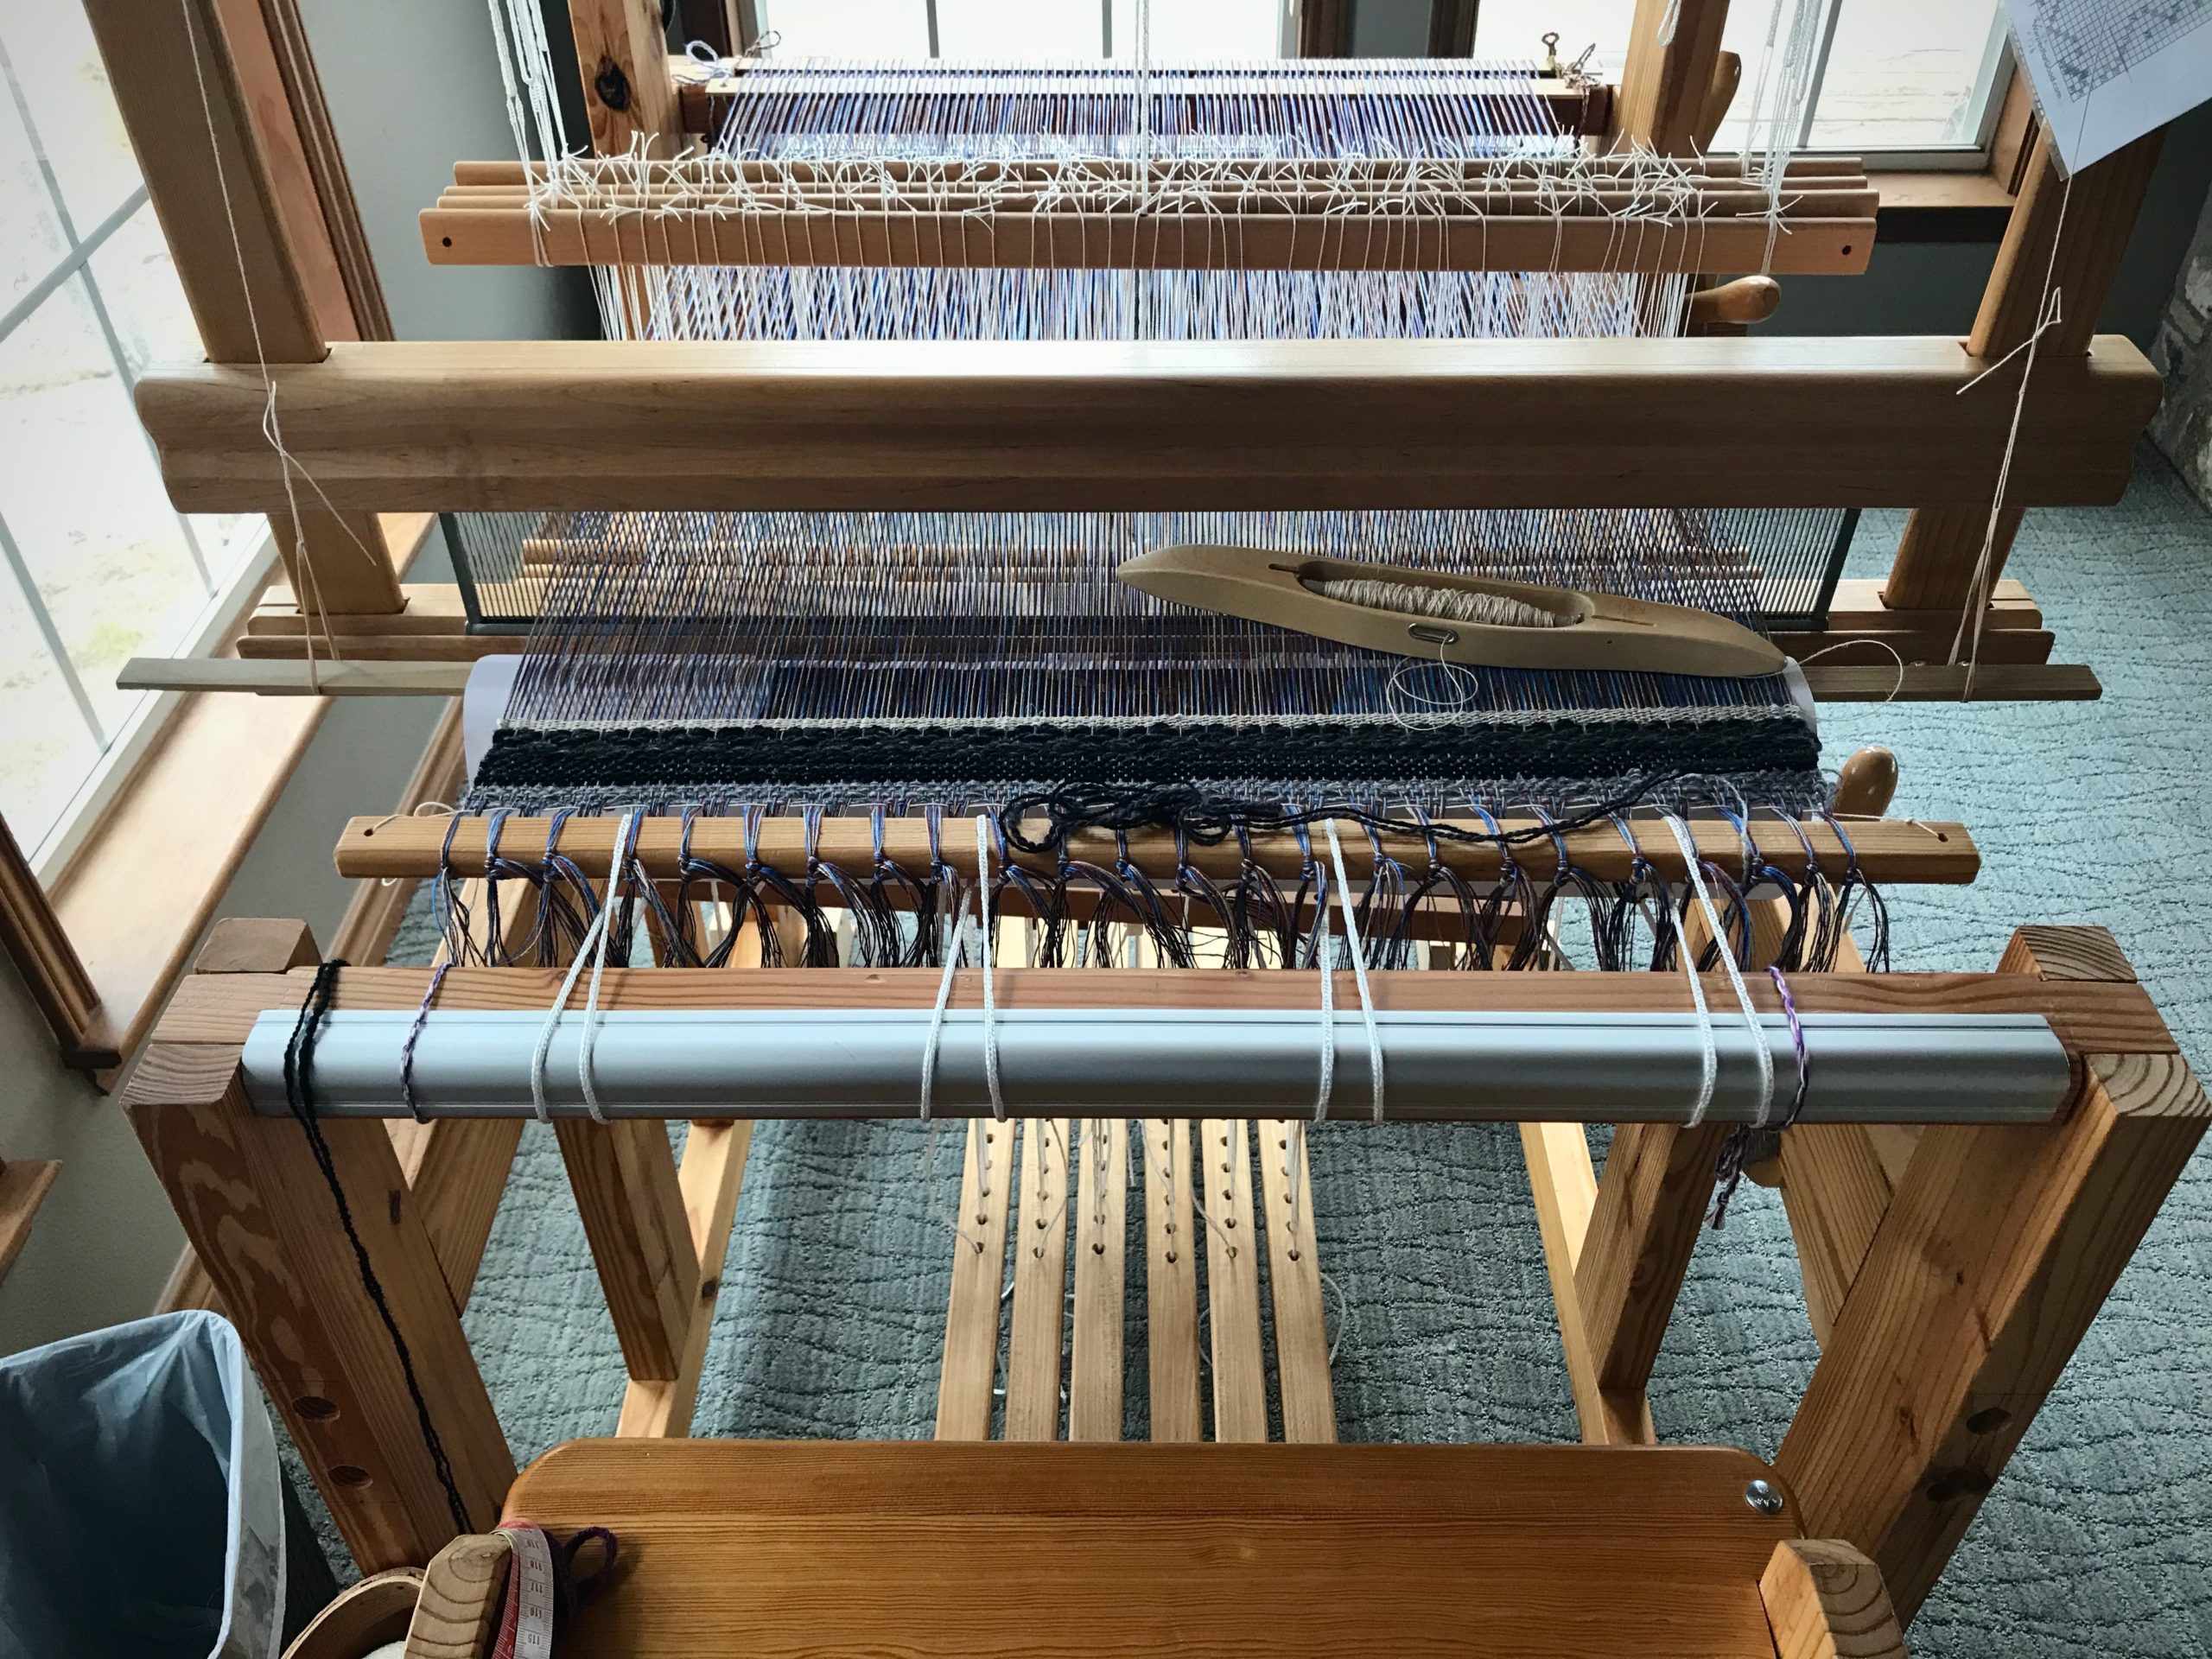 Hand-built Swedish loom.